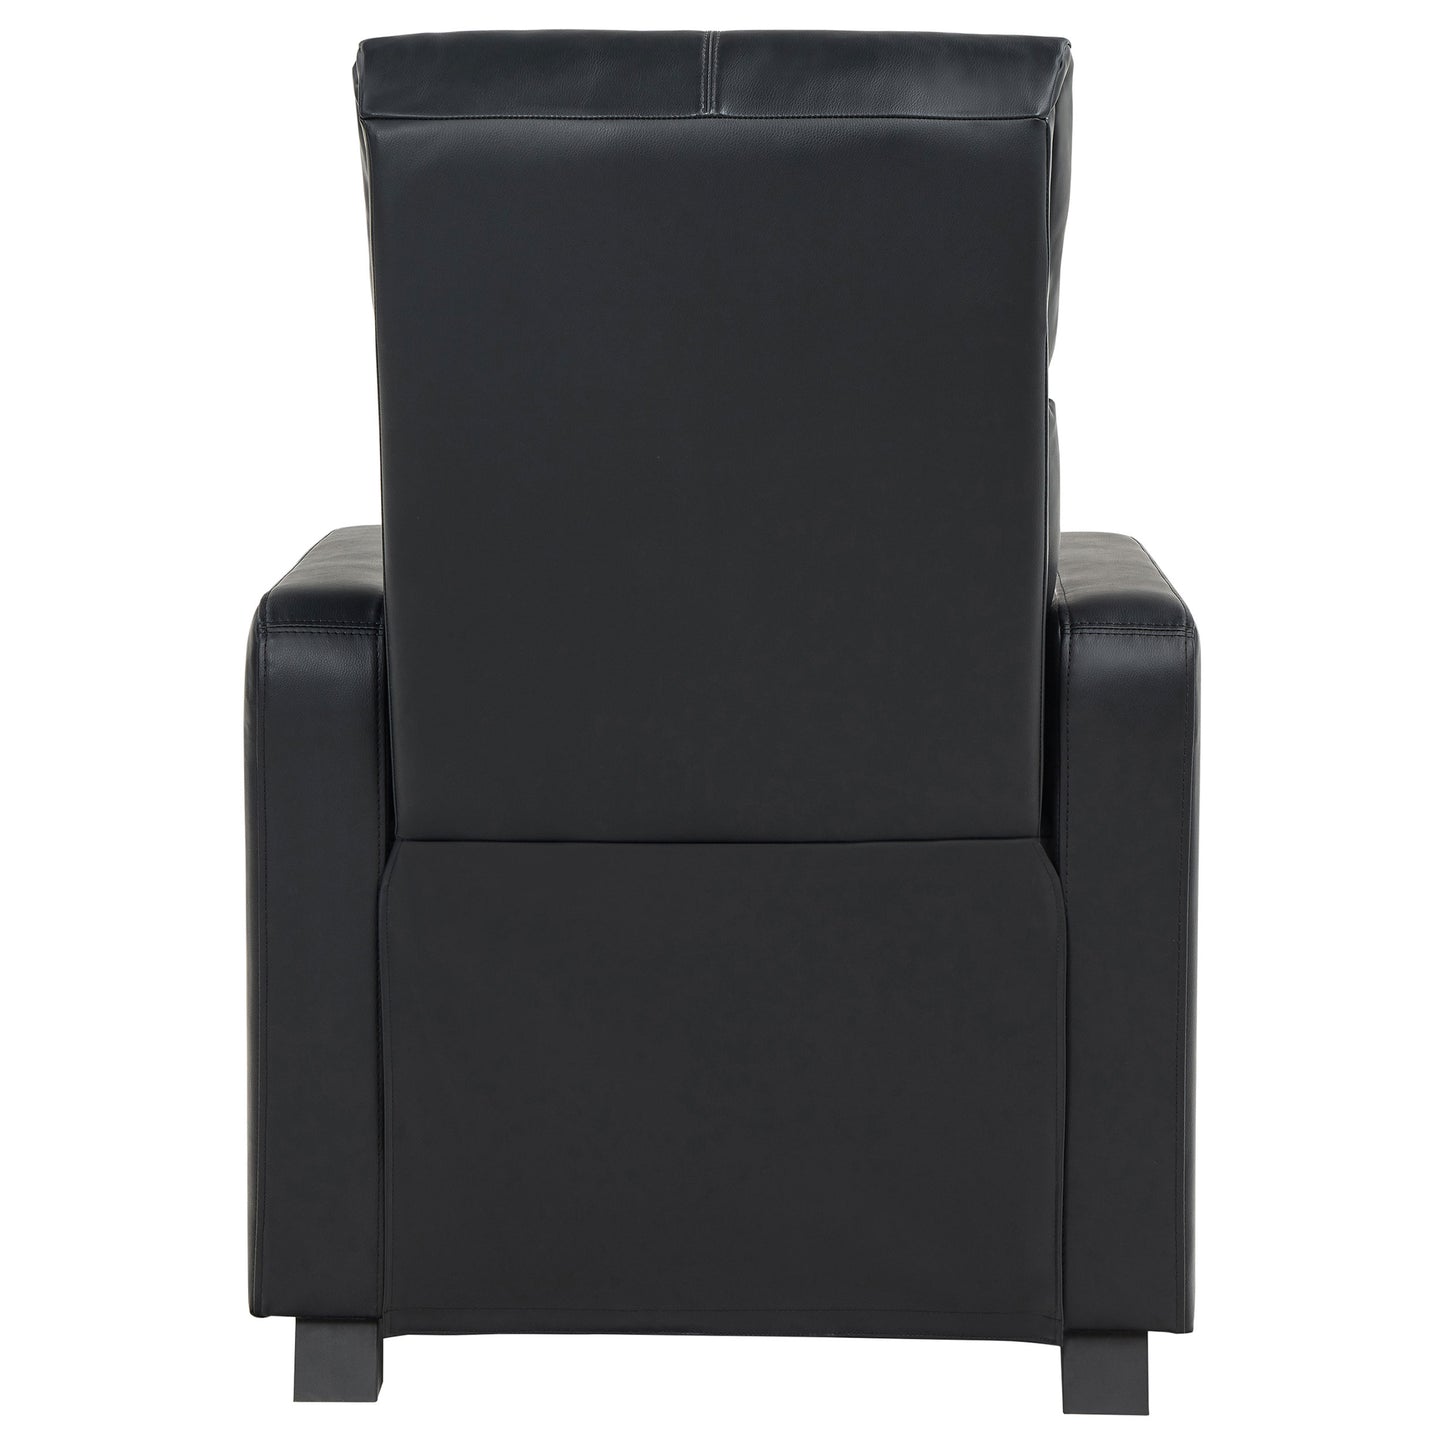 Toohey Upholstered Tufted Recliner Living Room Set Black